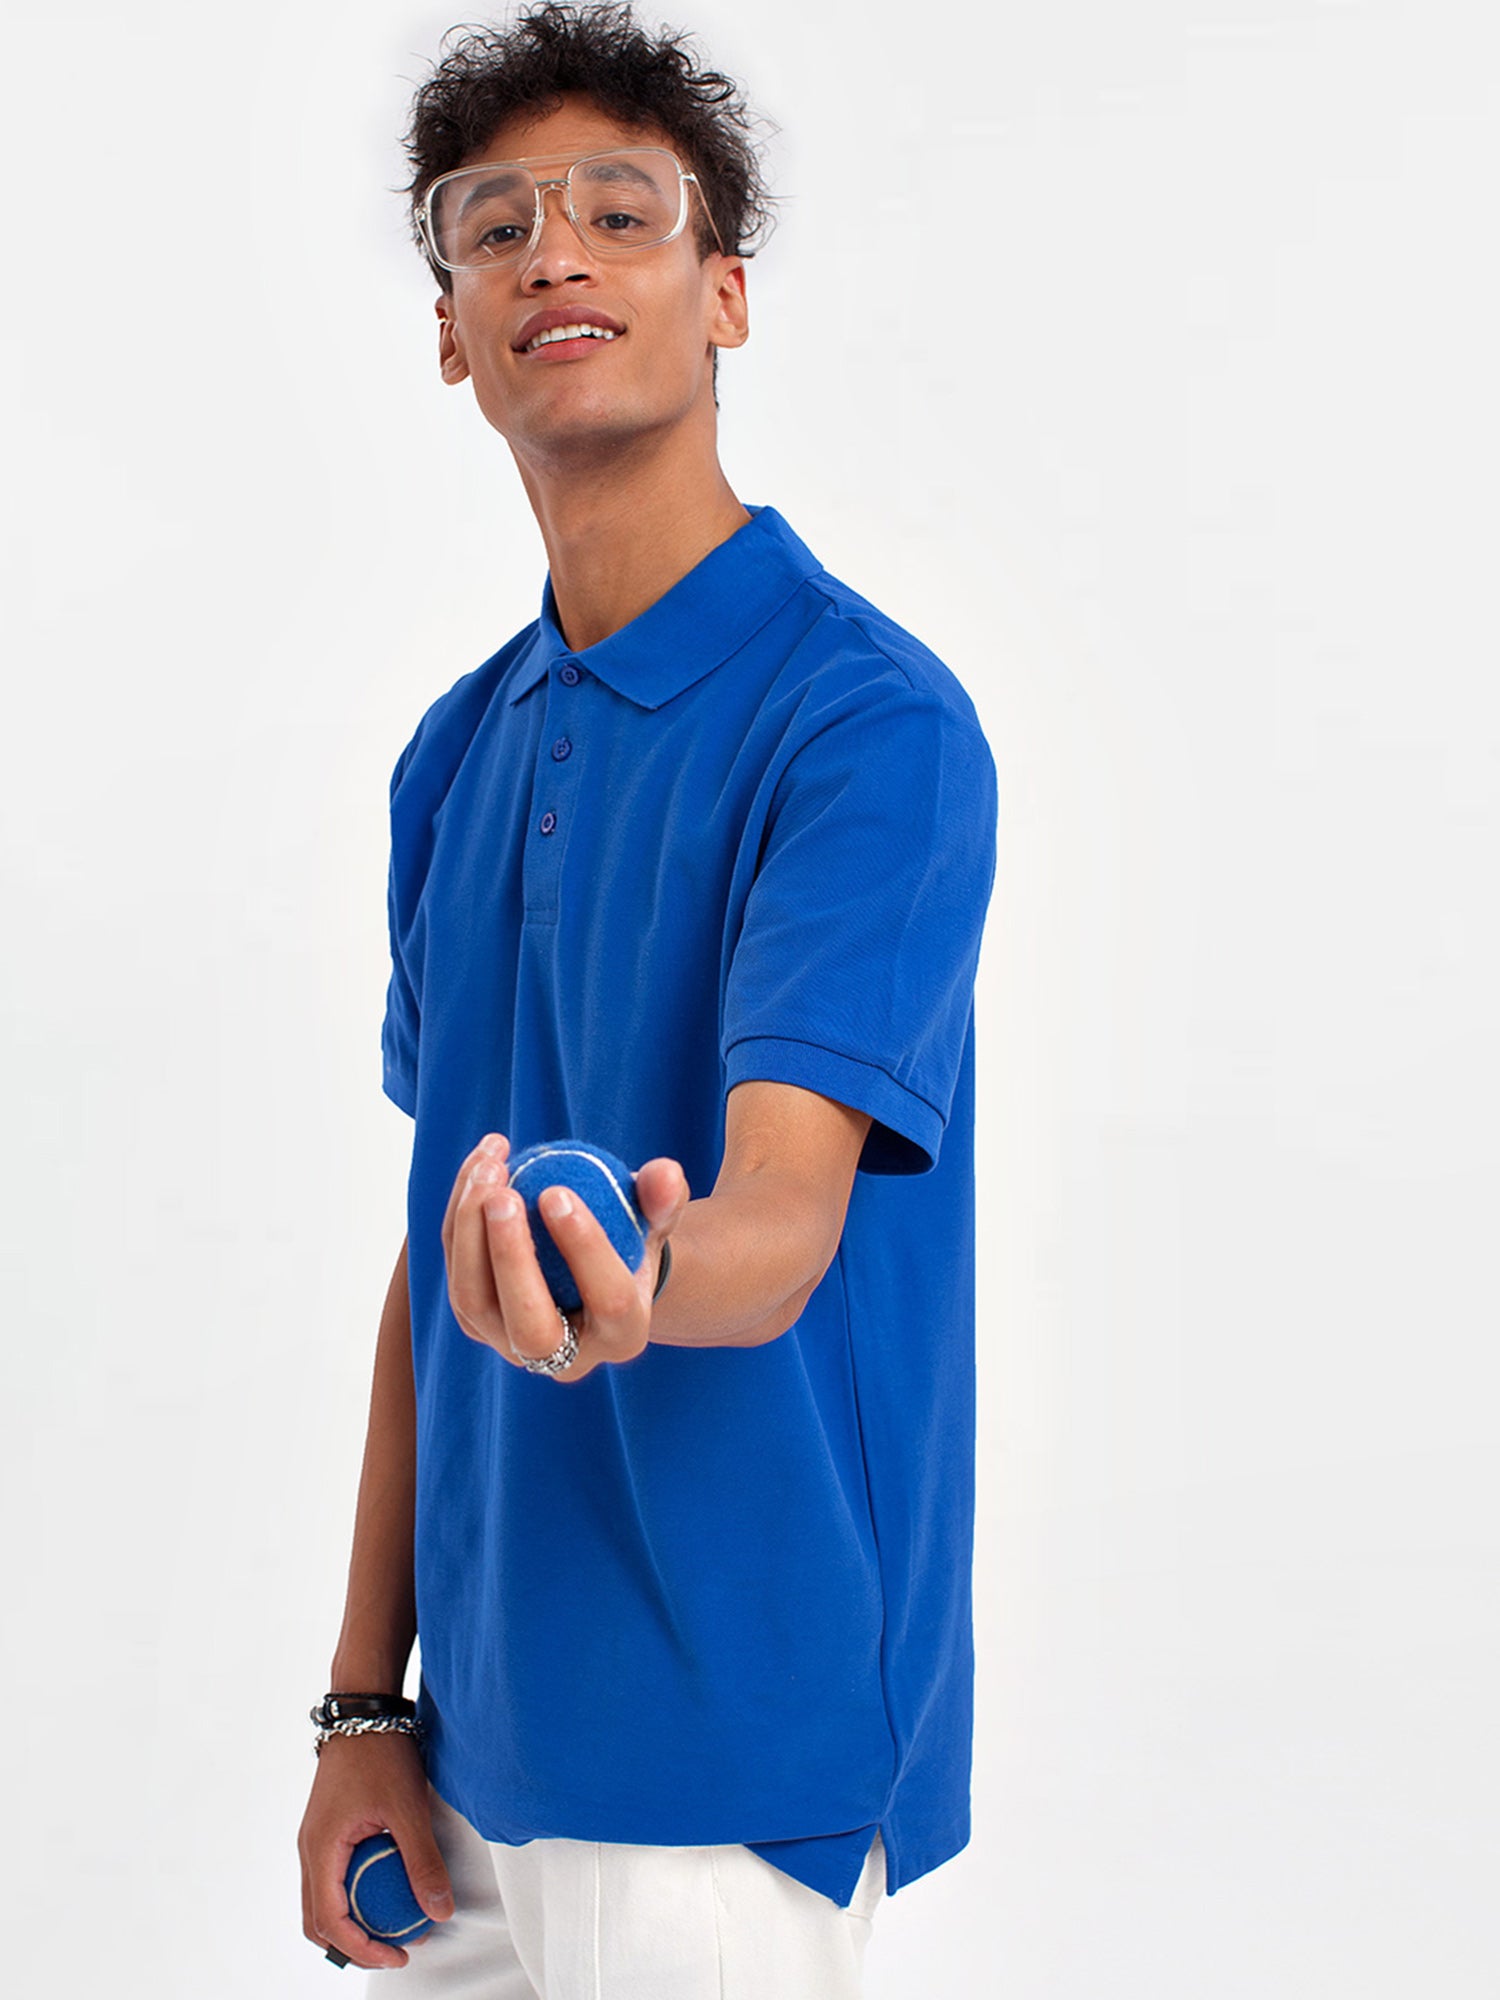 Blue Casual Plain Polo T-Shirt for men's